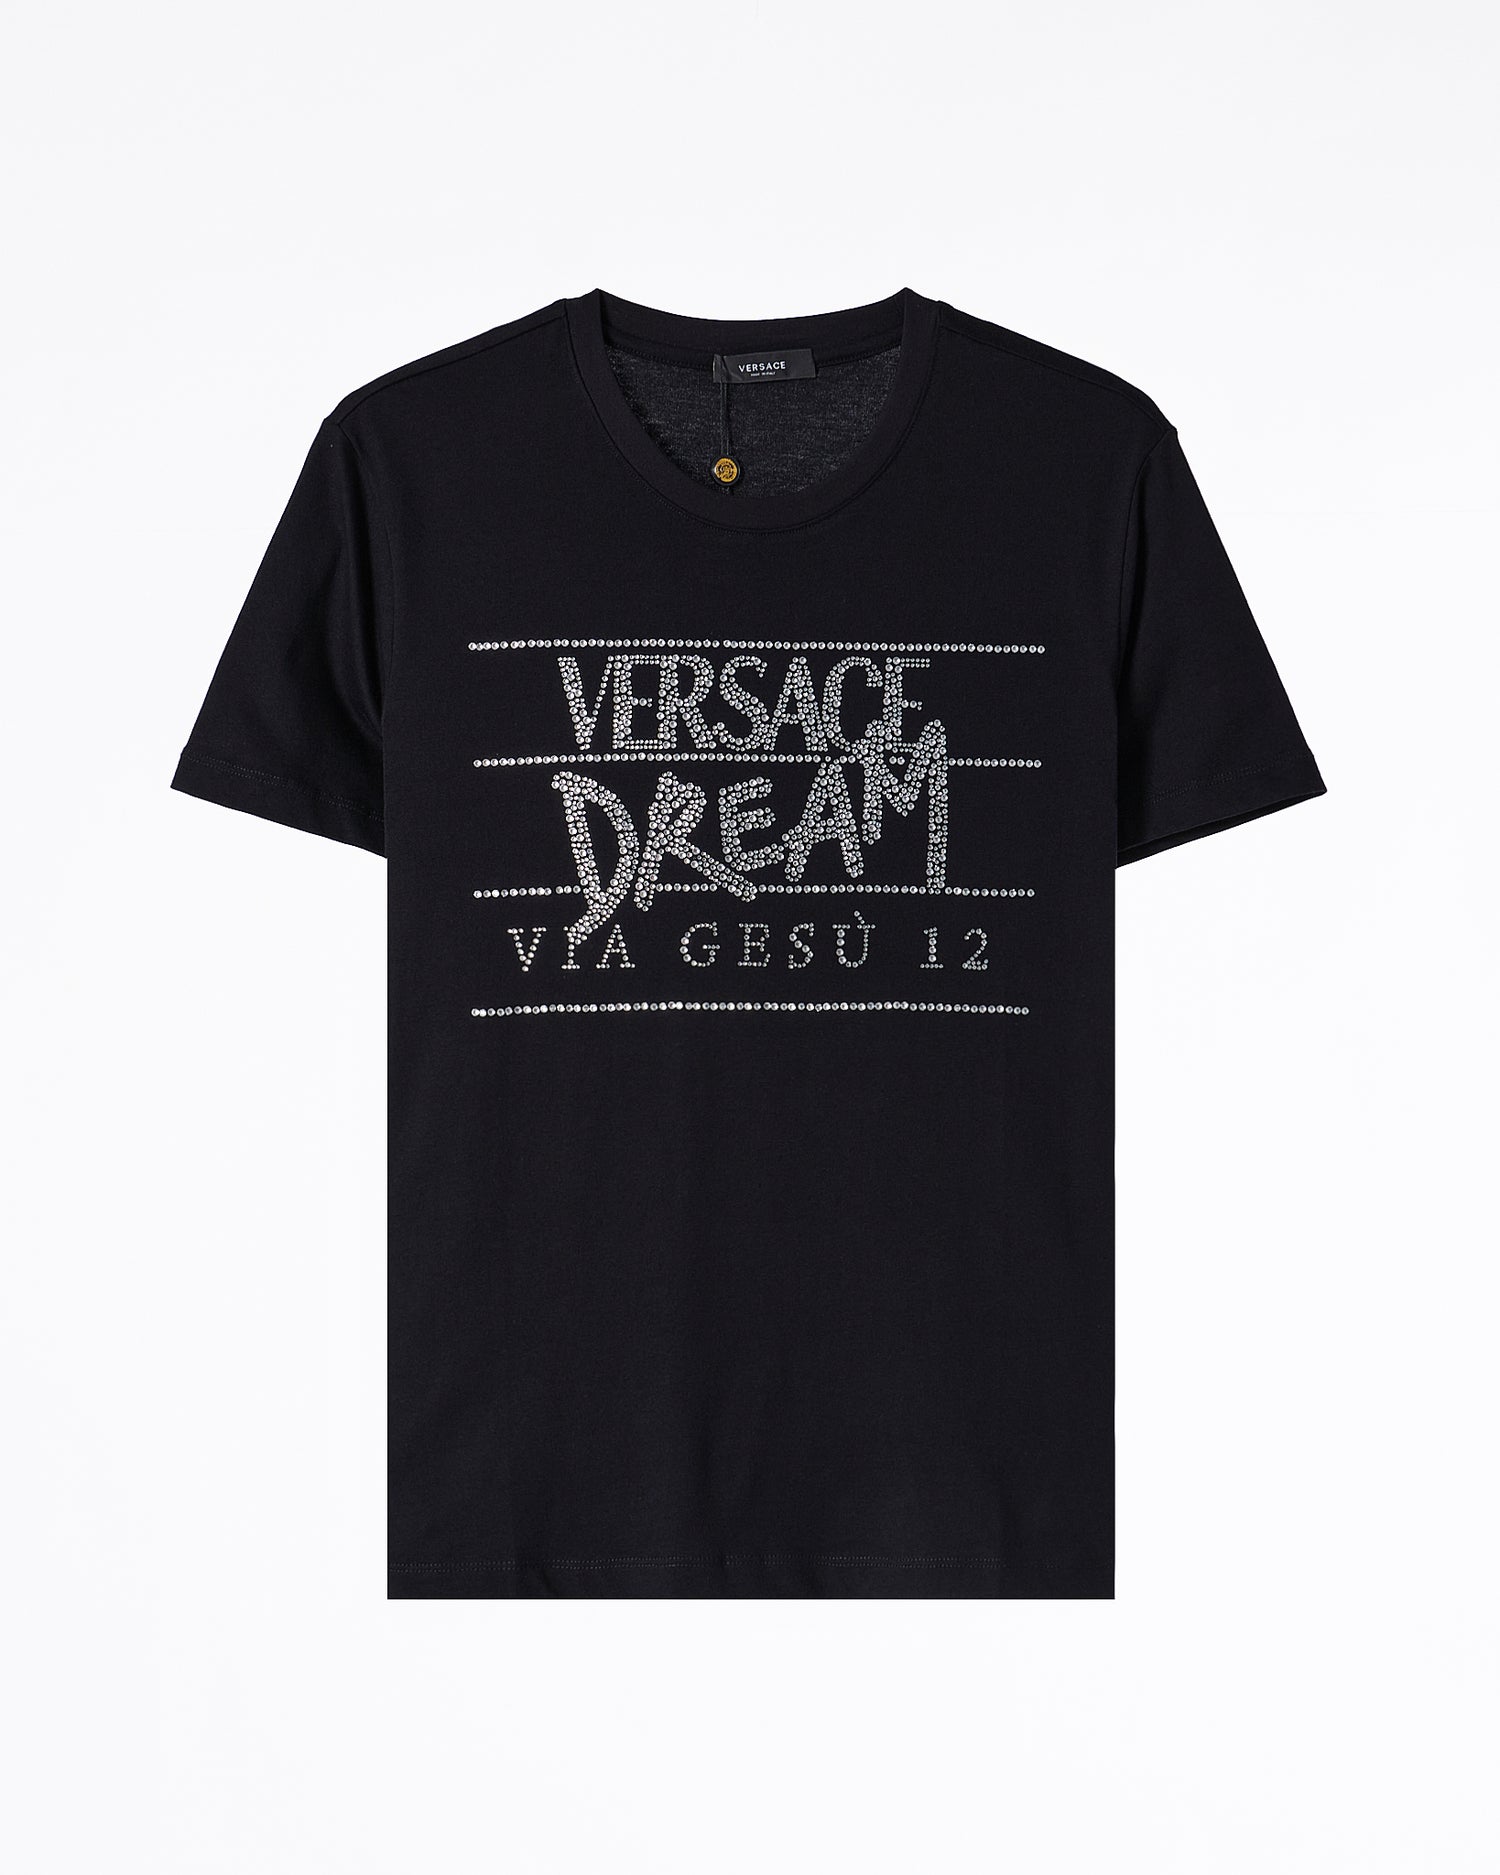 Rhinestone Dream Printed Men T-Shirt 54.90